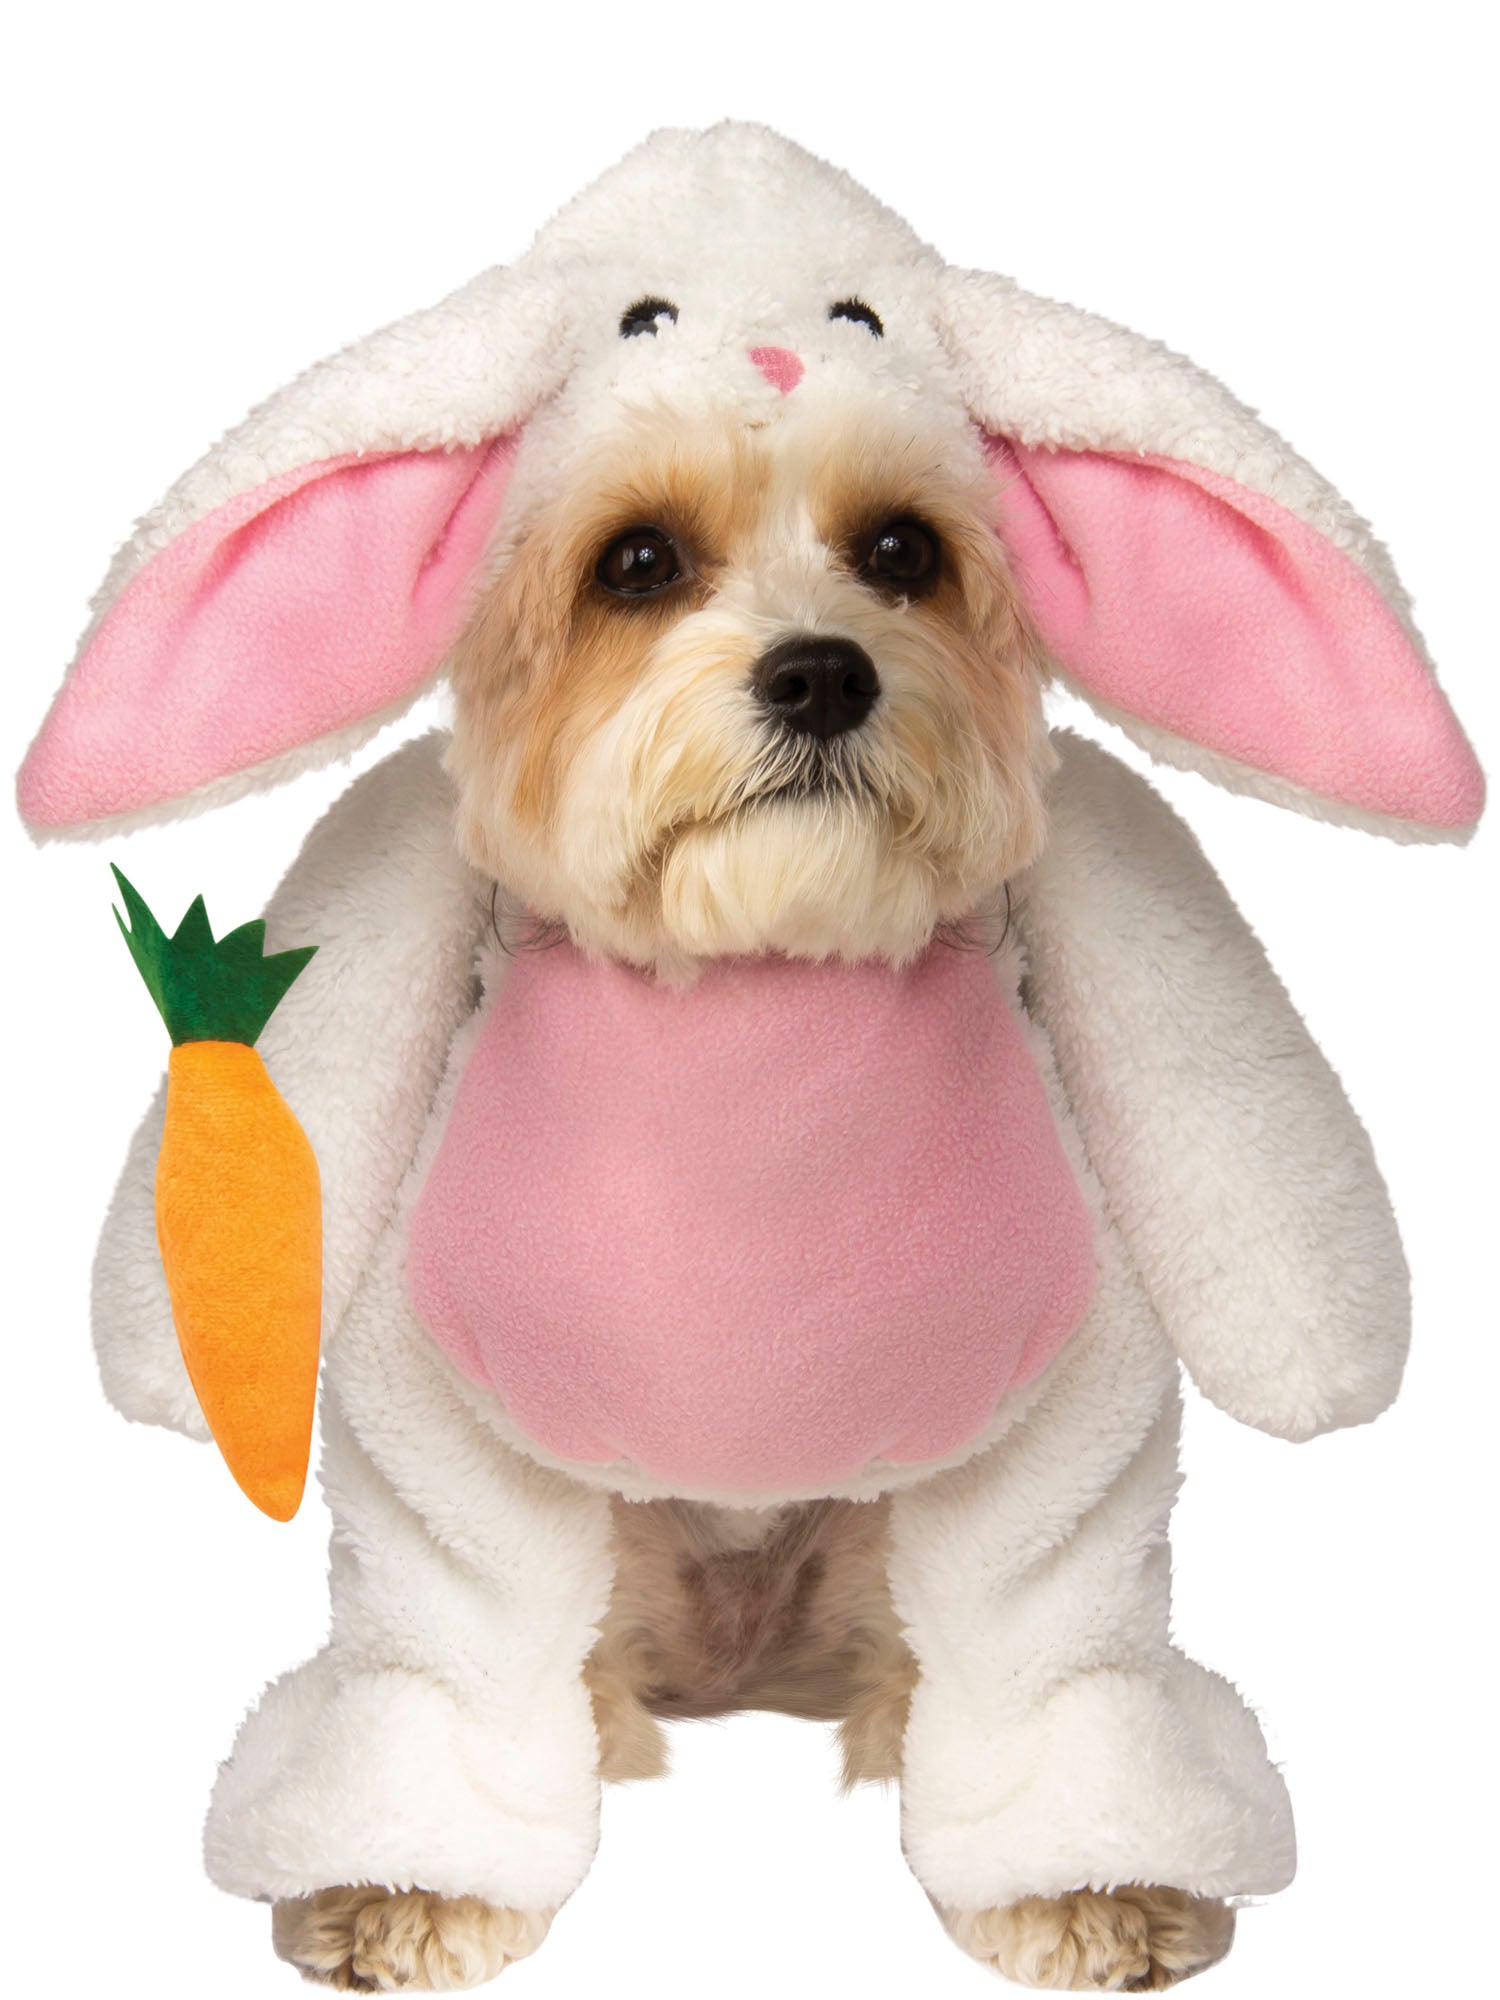 Pet Walking Bunny Costume - costumes.com